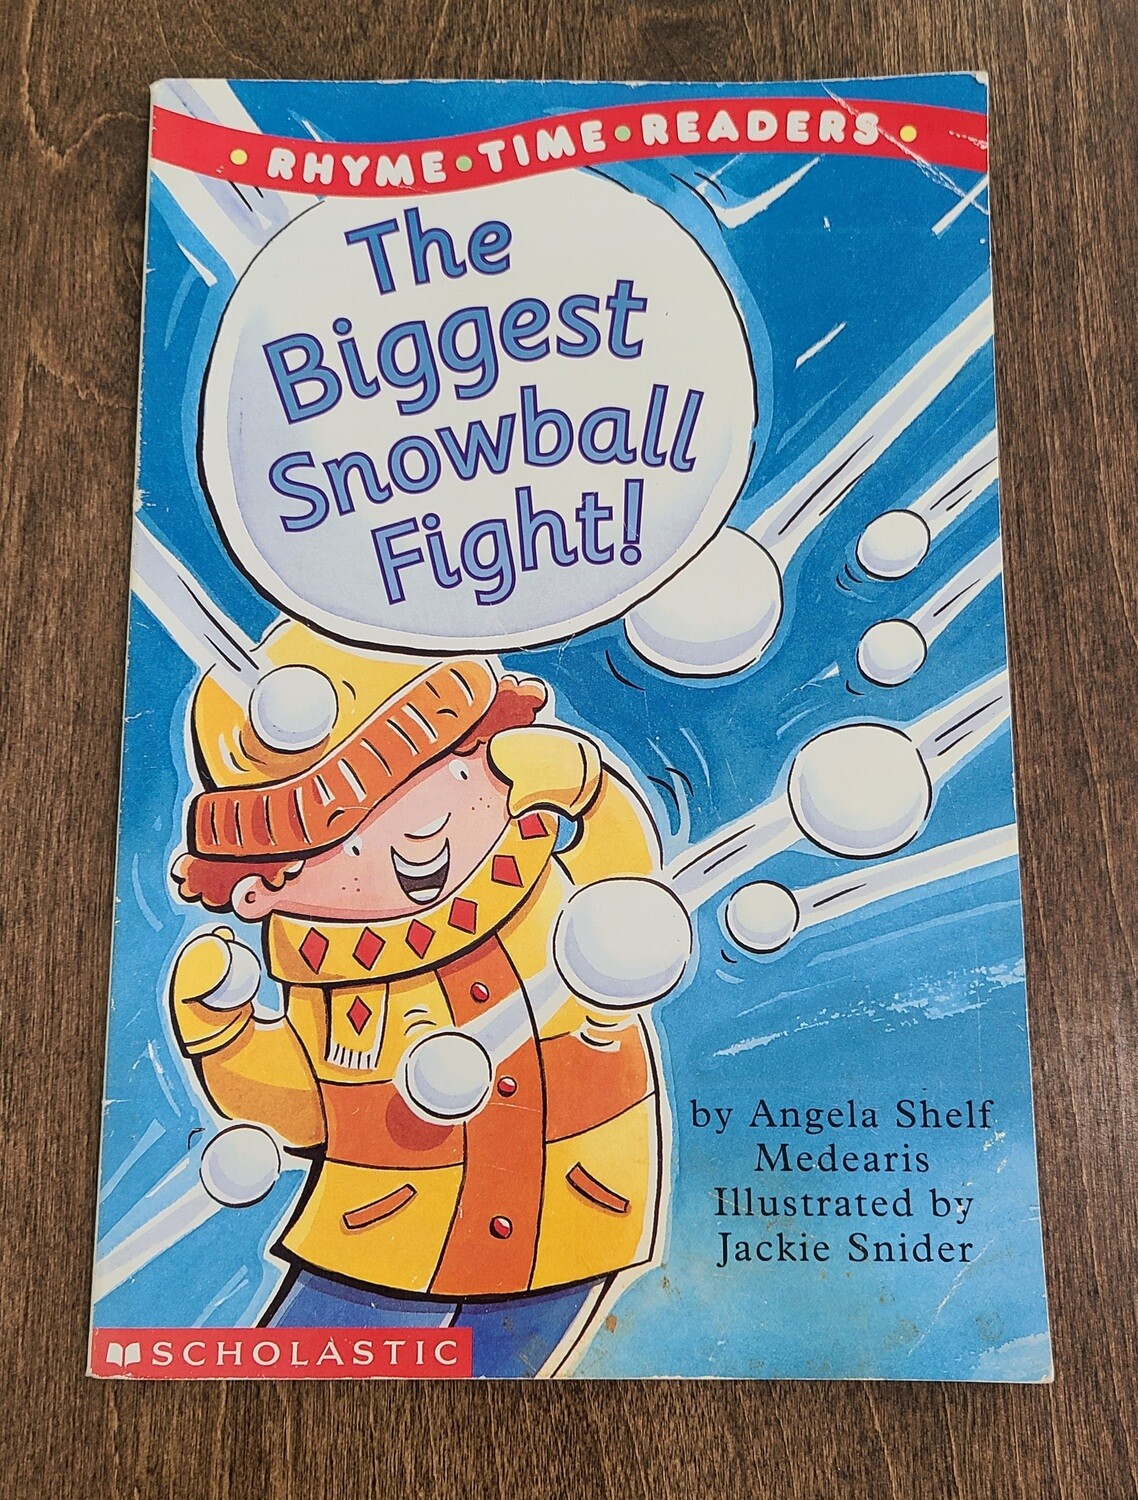 The Biggest Snowball Fight by Angela Shelf Medearis